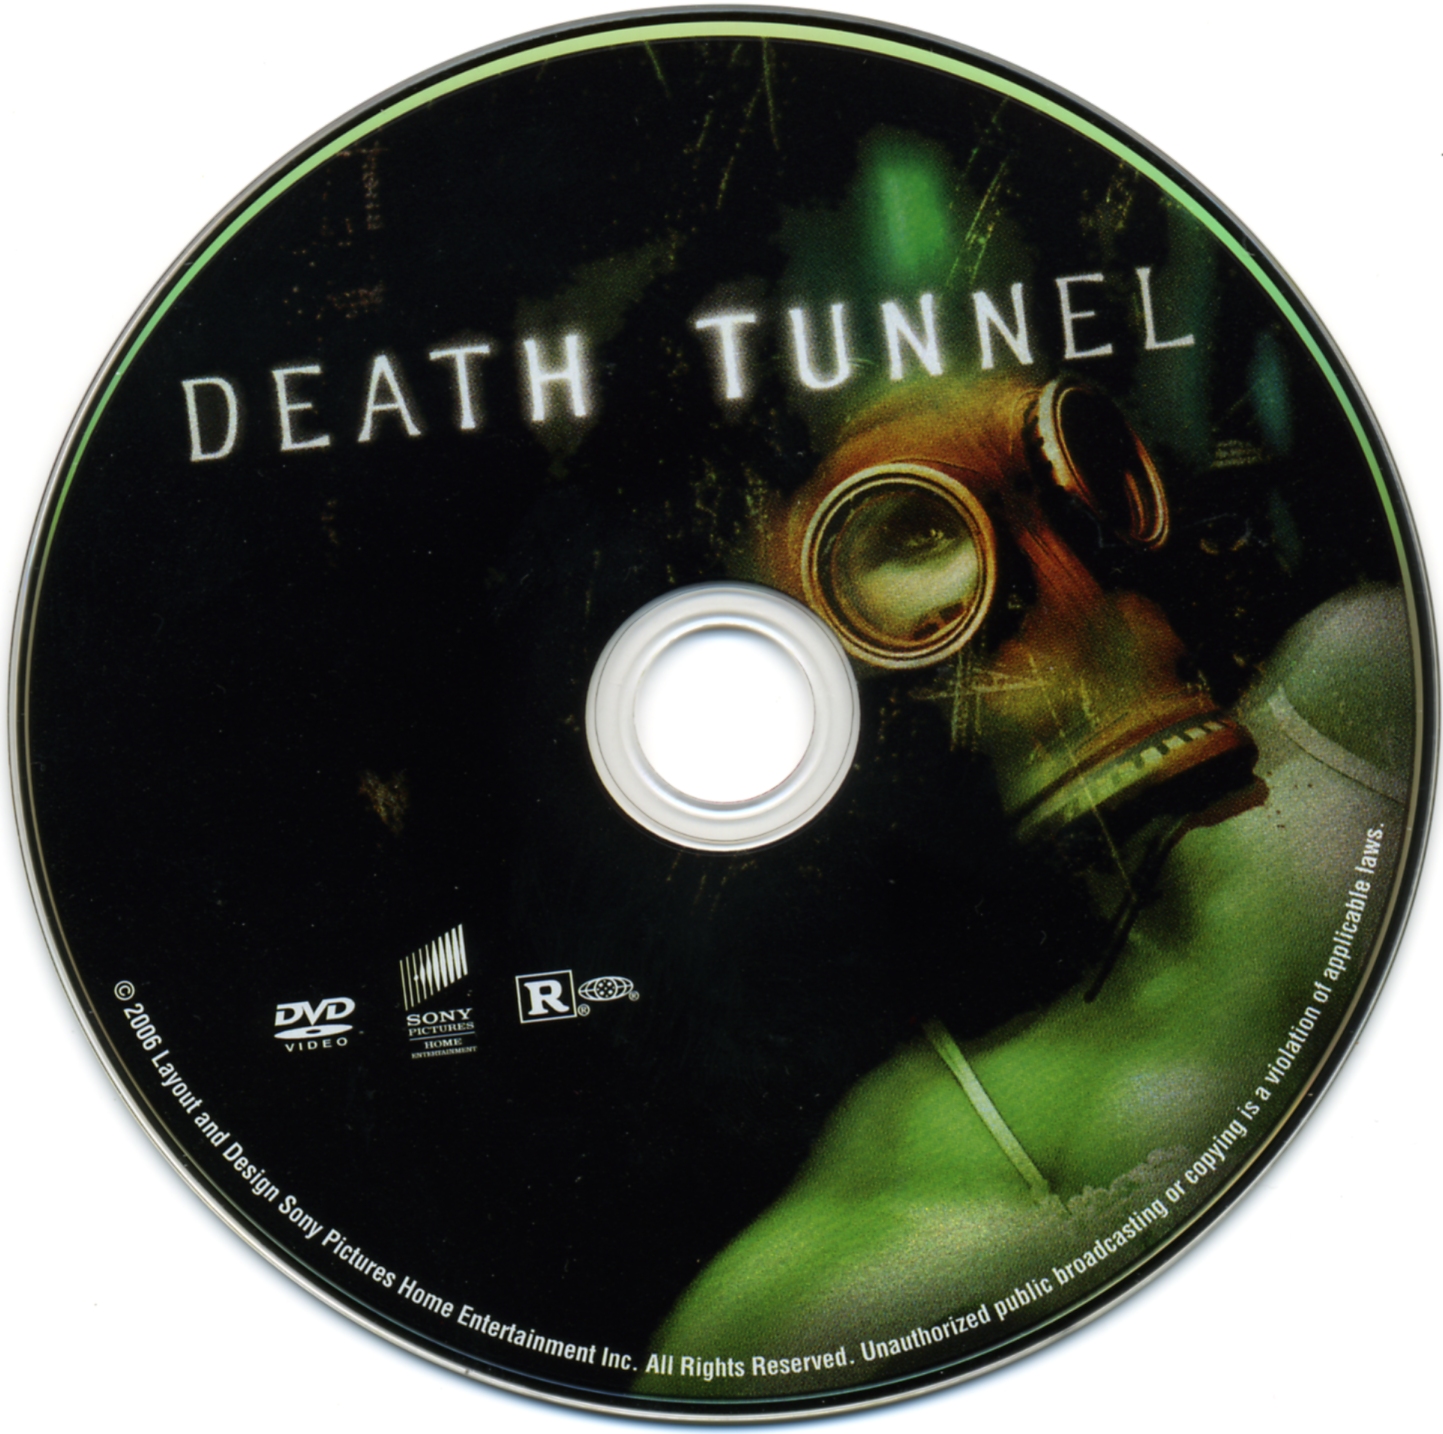 Death tunnel